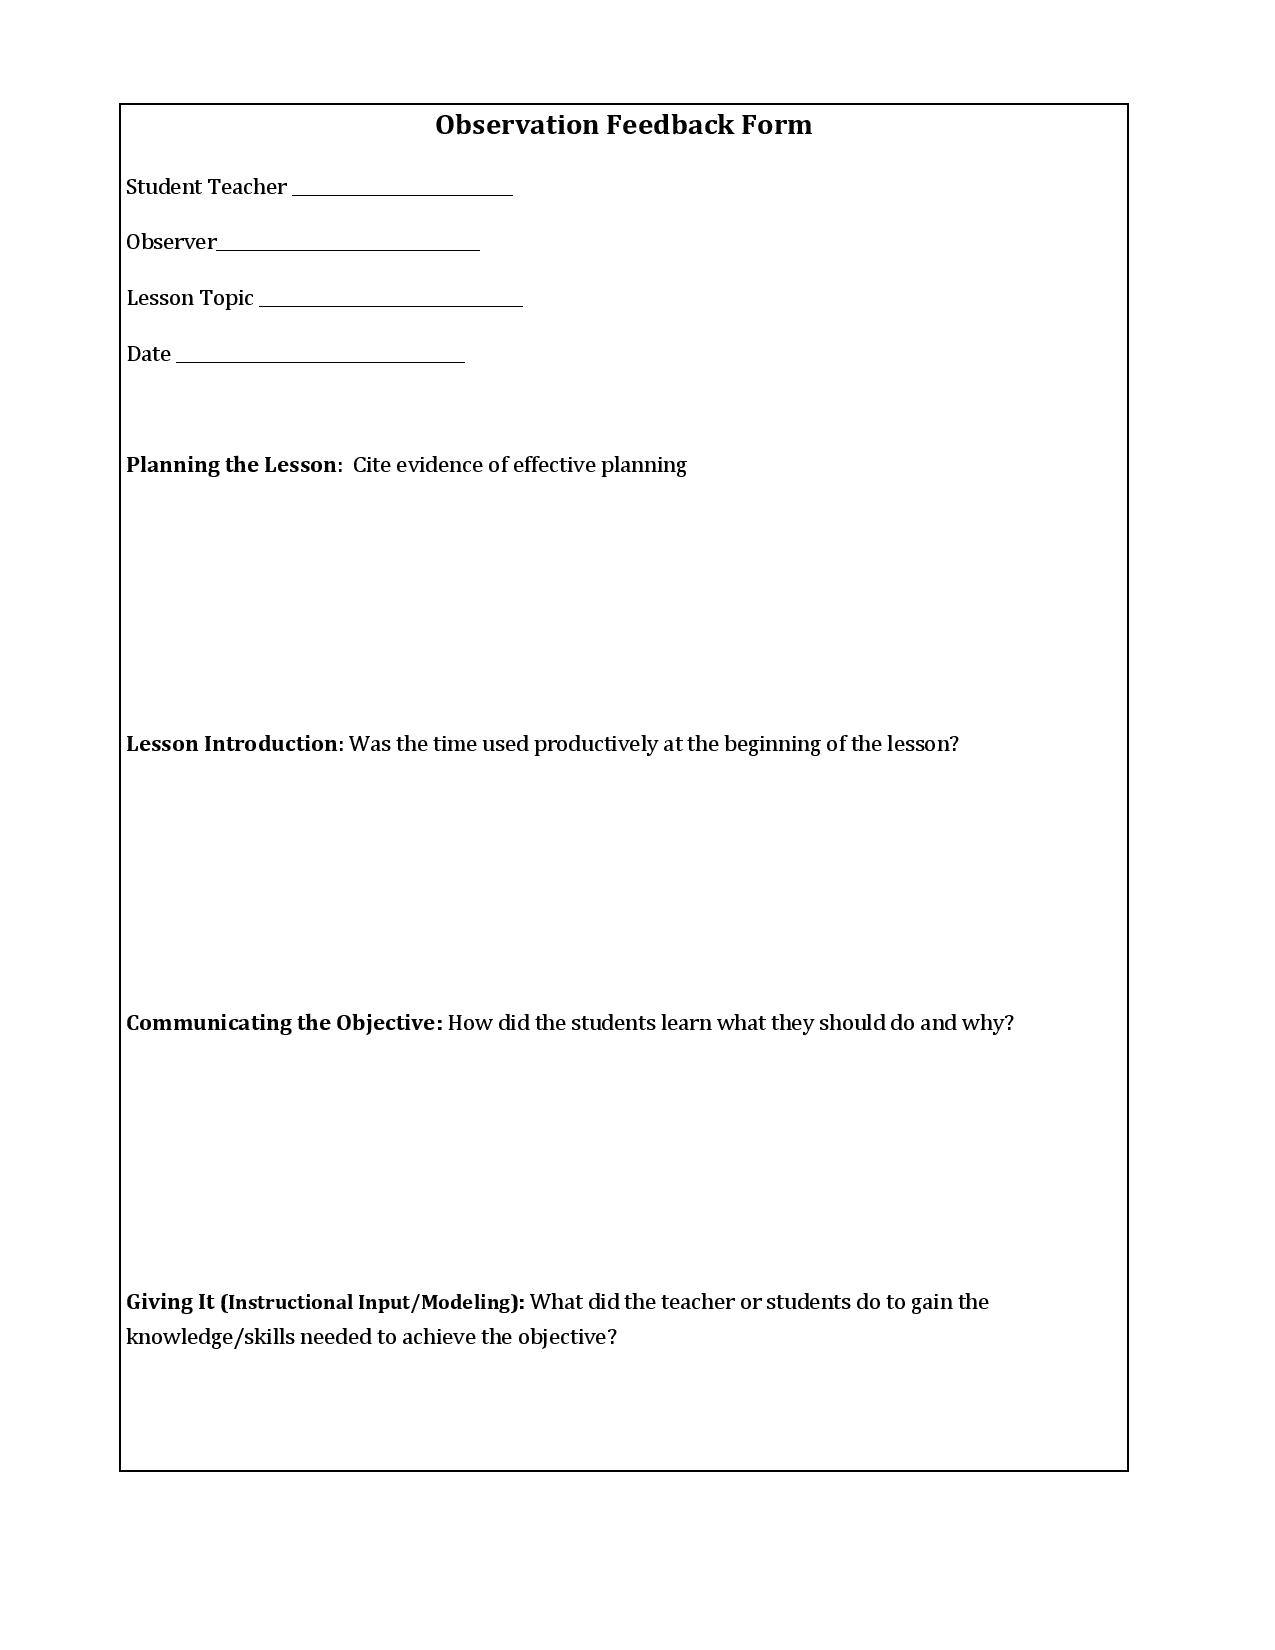 observation feedback form page 001